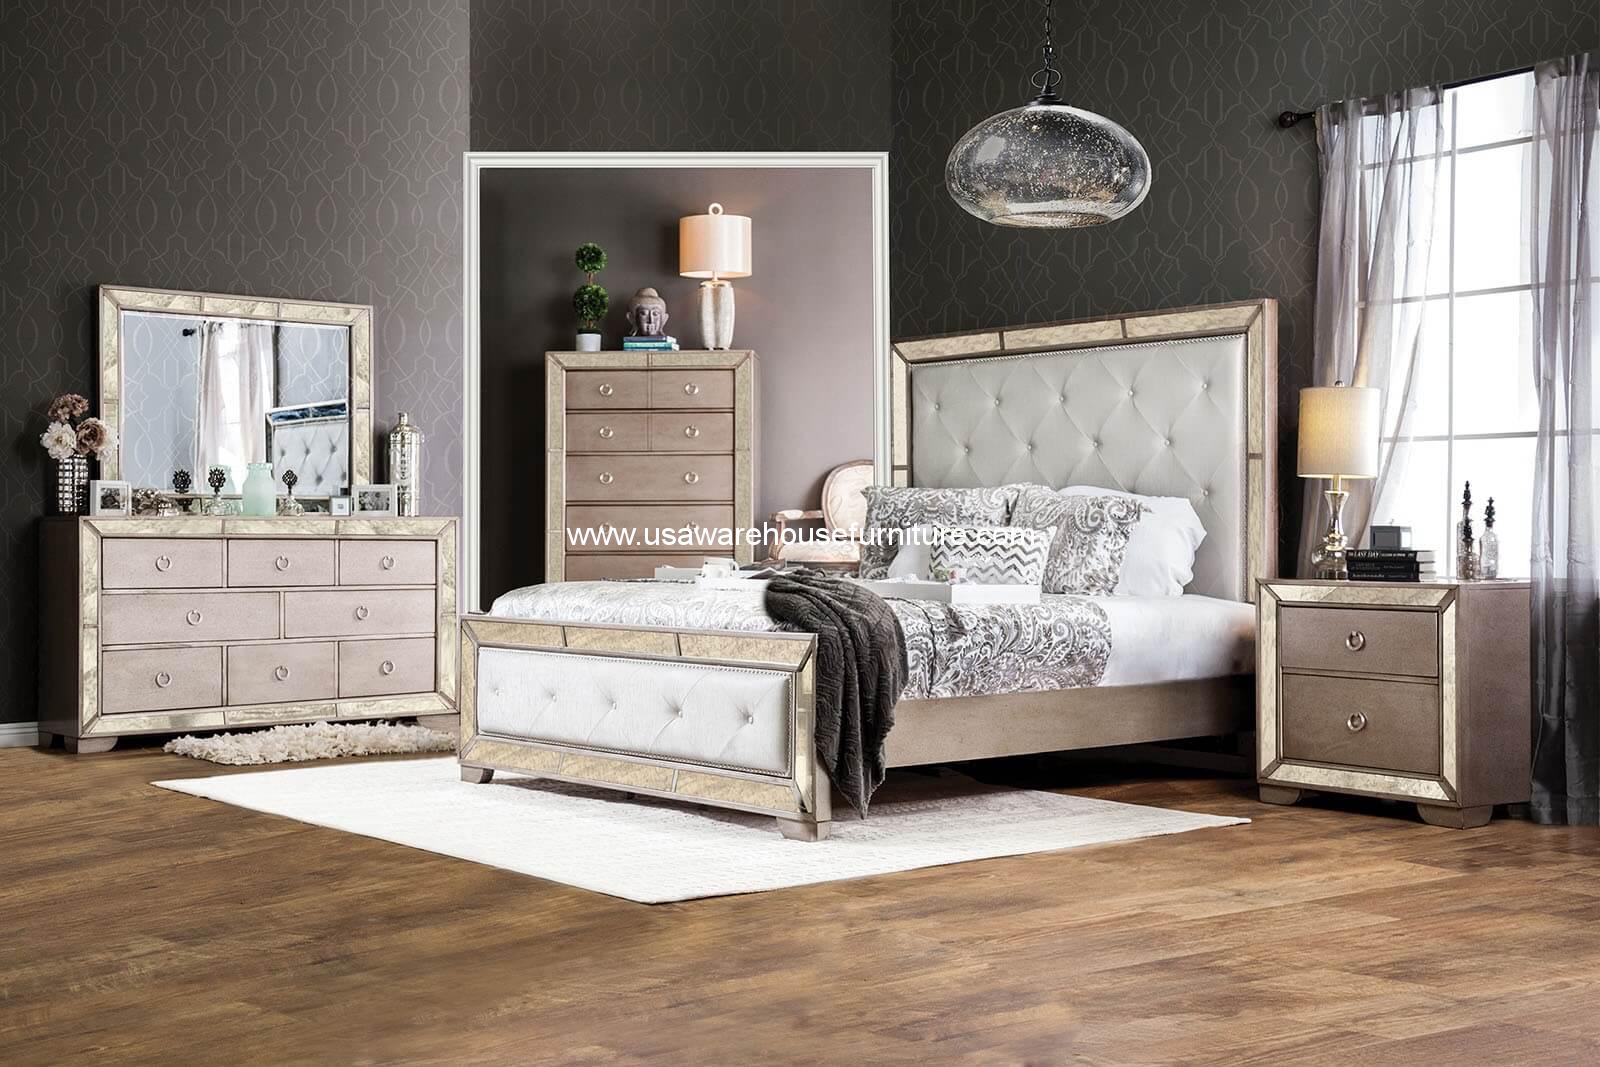 antique mirrored bedroom furniture uk